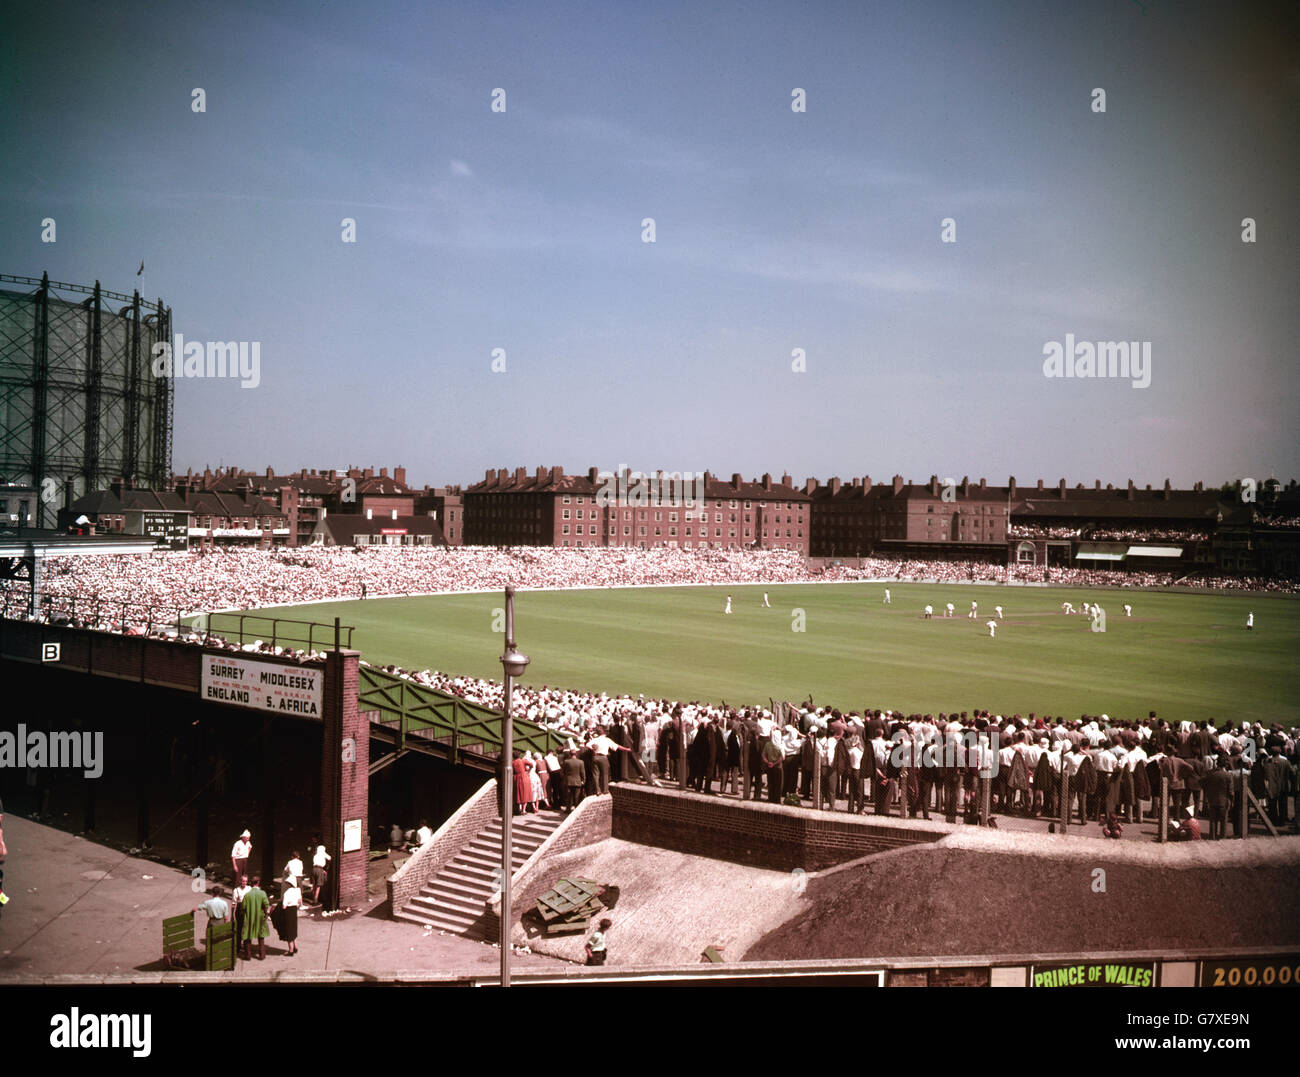 Cricket - Inghilterra / Sud Africa - 5° Test - Kennington Oval. Vista generale dell'ovale durante la partita Inghilterra/Sudafrica. Foto Stock